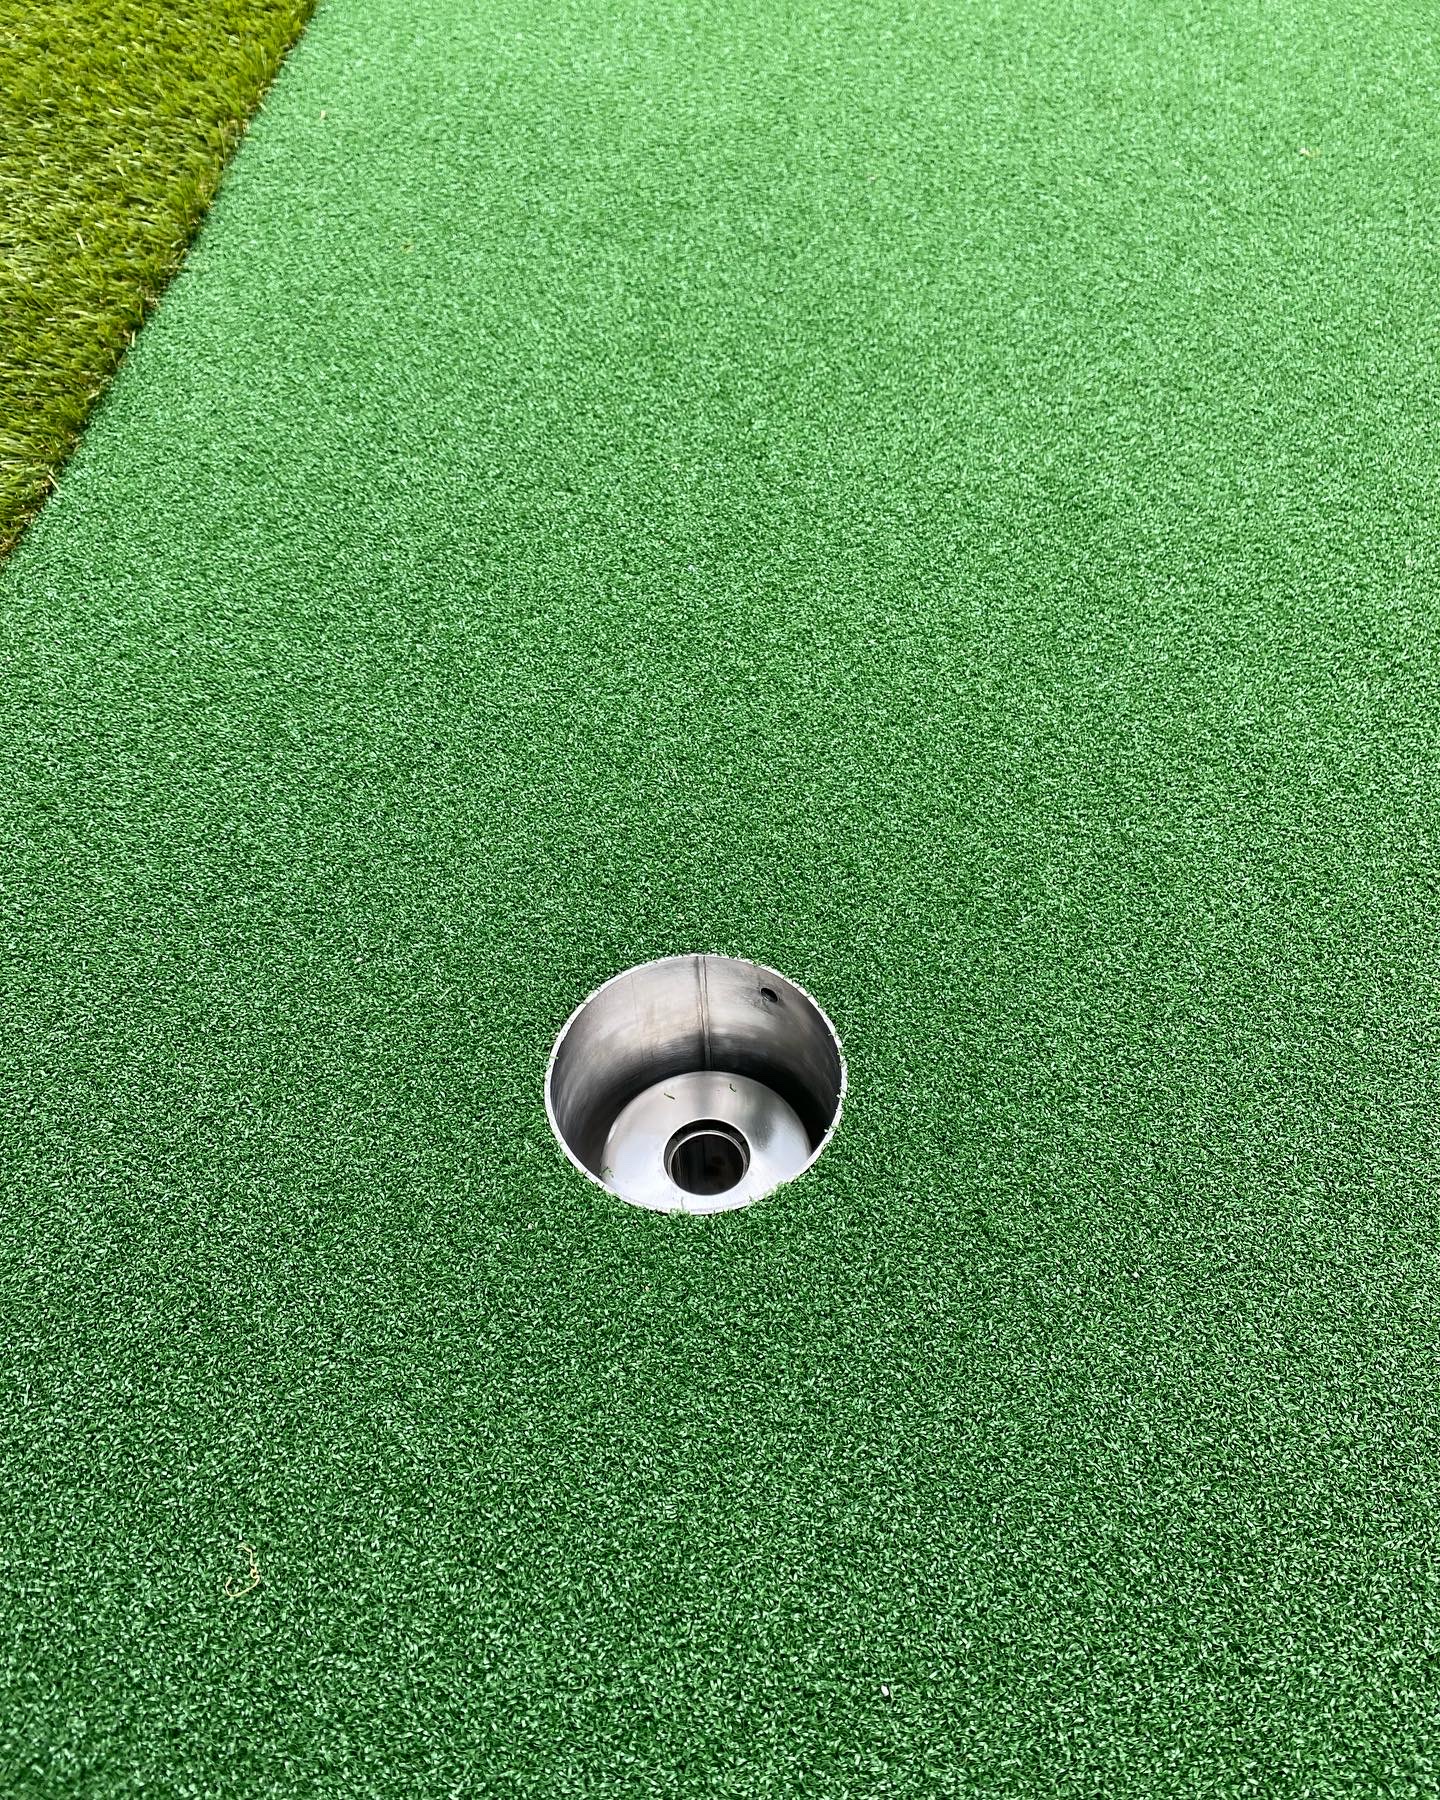 image4 1 人工芝とゴルフパターのコラボです(^^♪